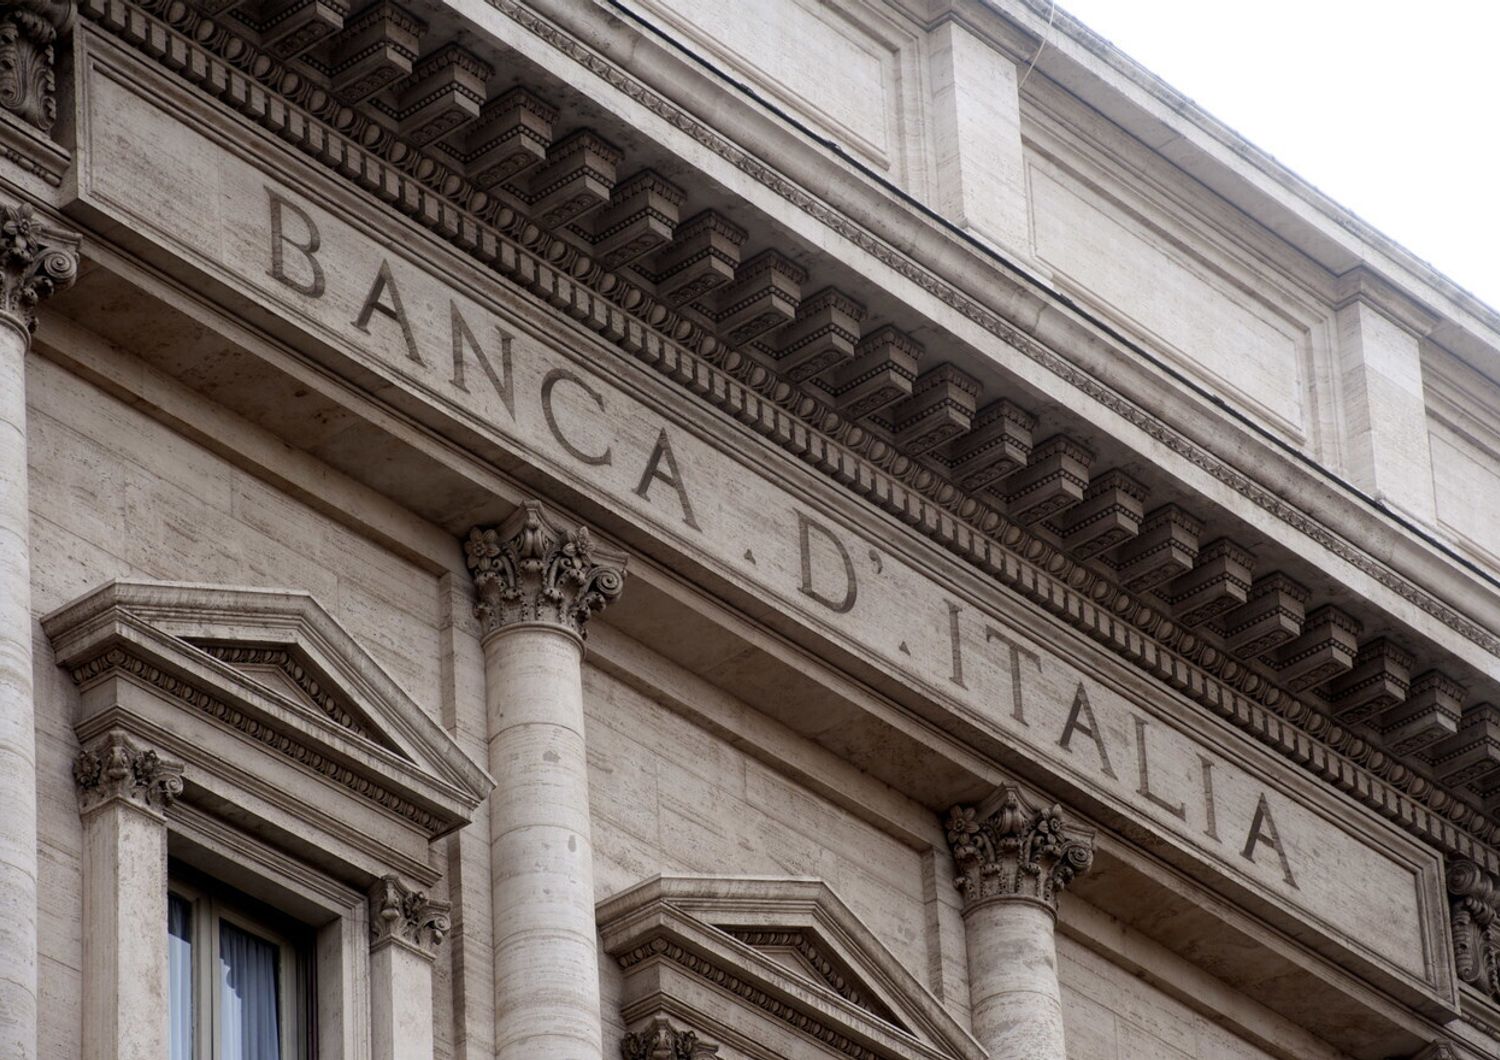 La sede della Banca d'Italia